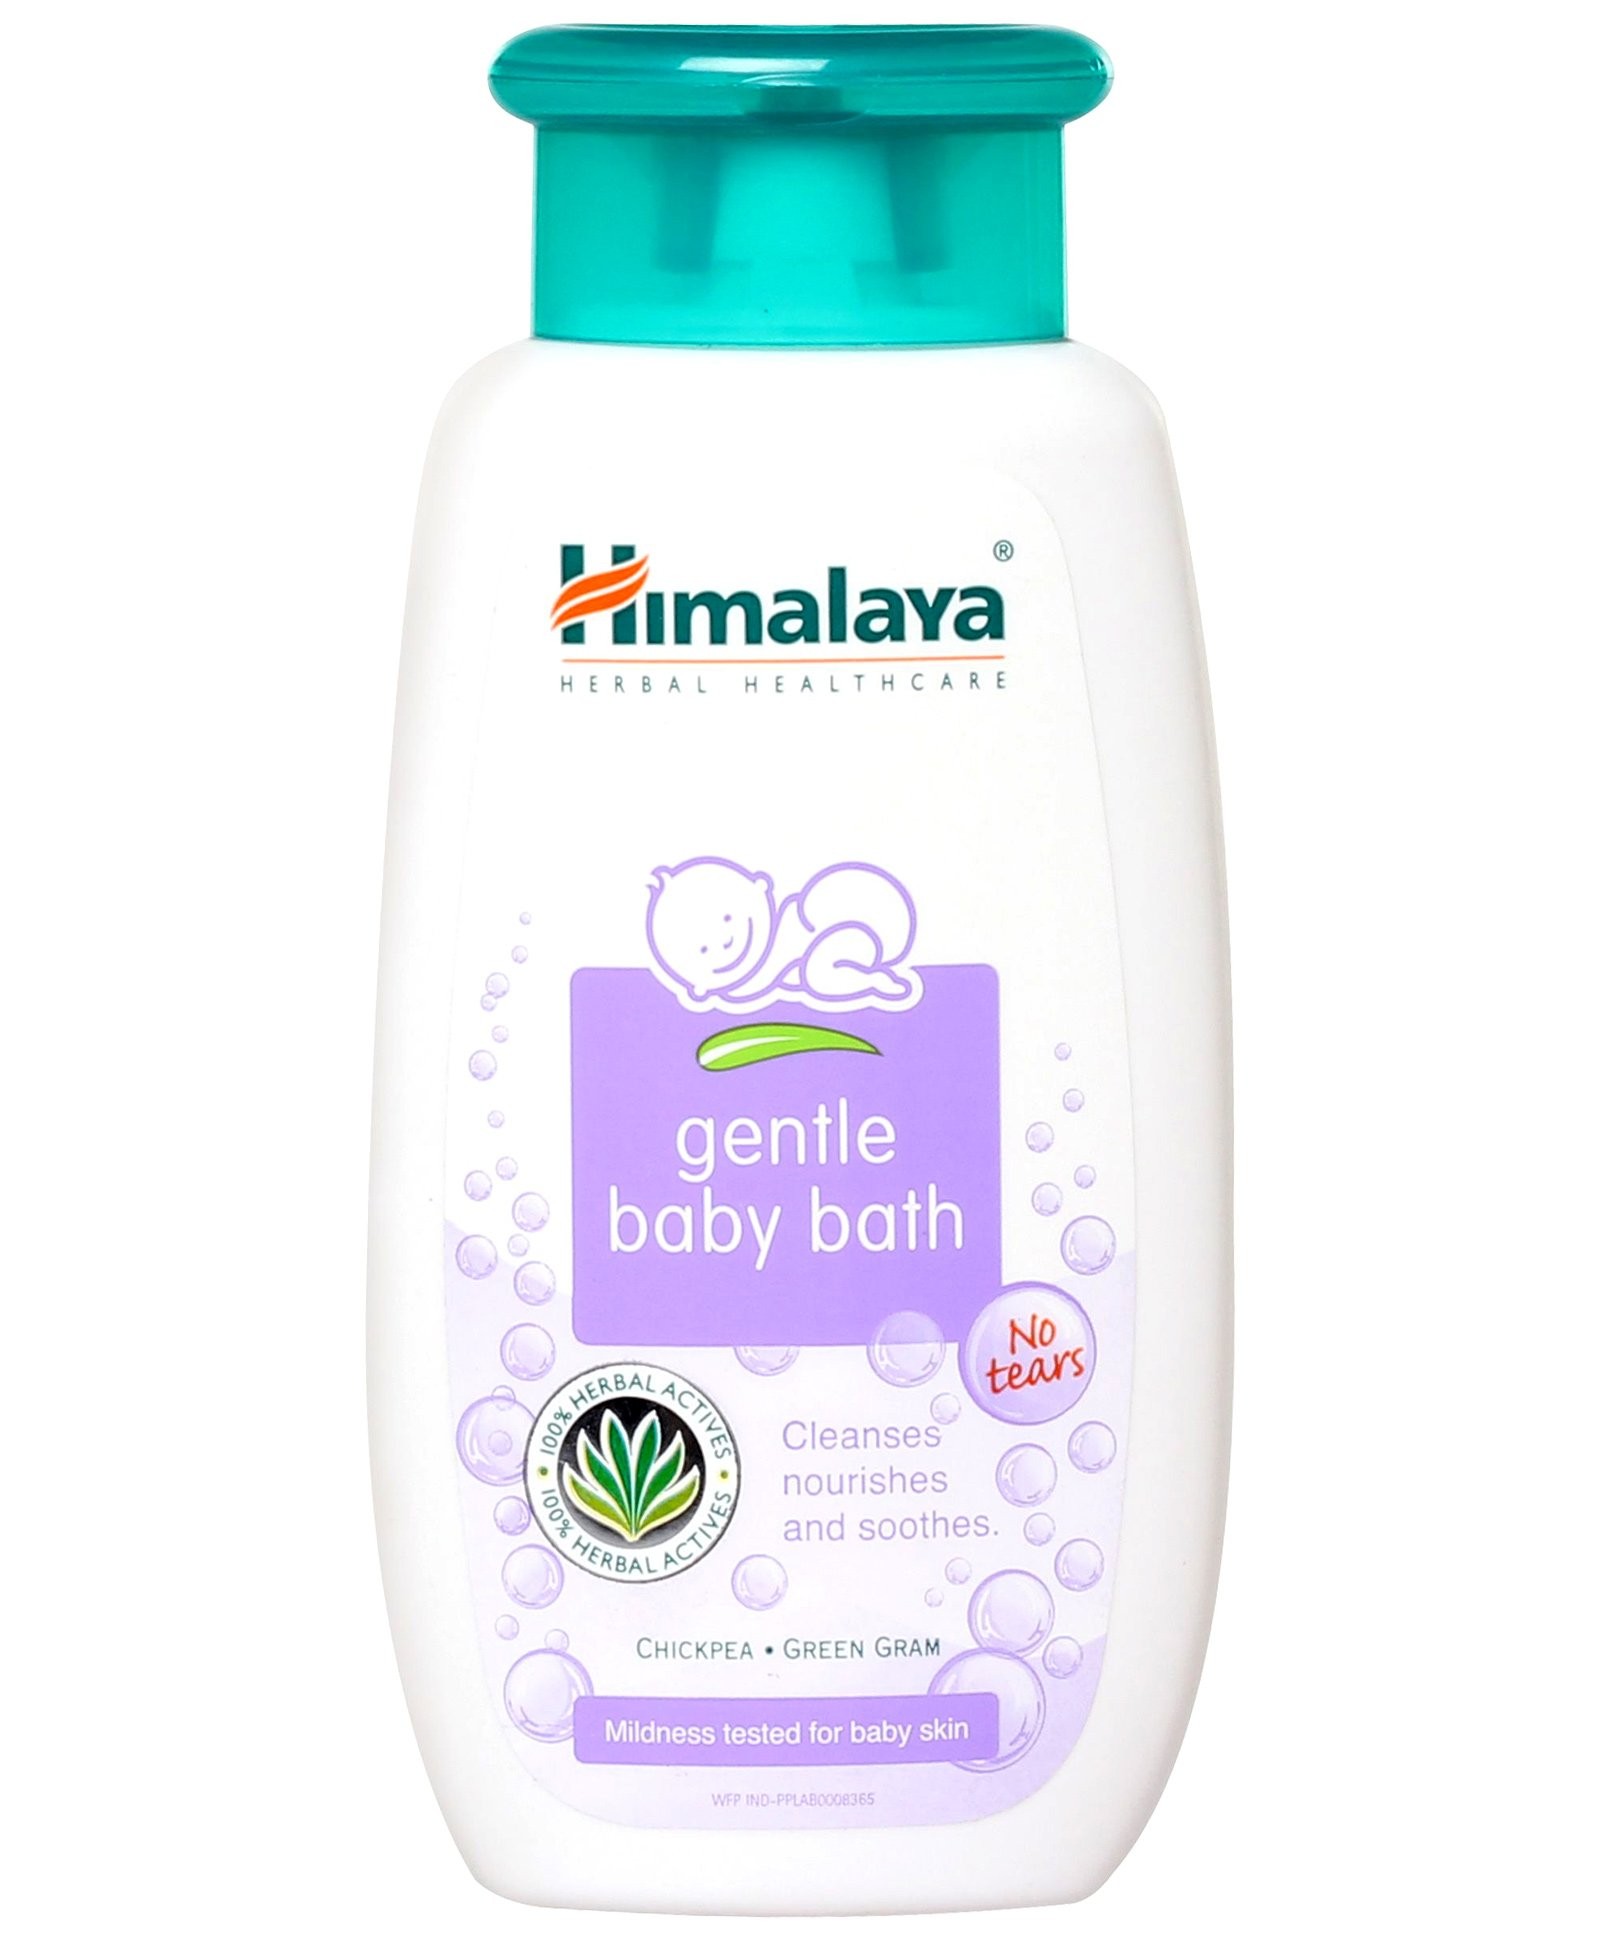 Himalaya Gentle Baby Bath - No tears Chickpea Green Gram